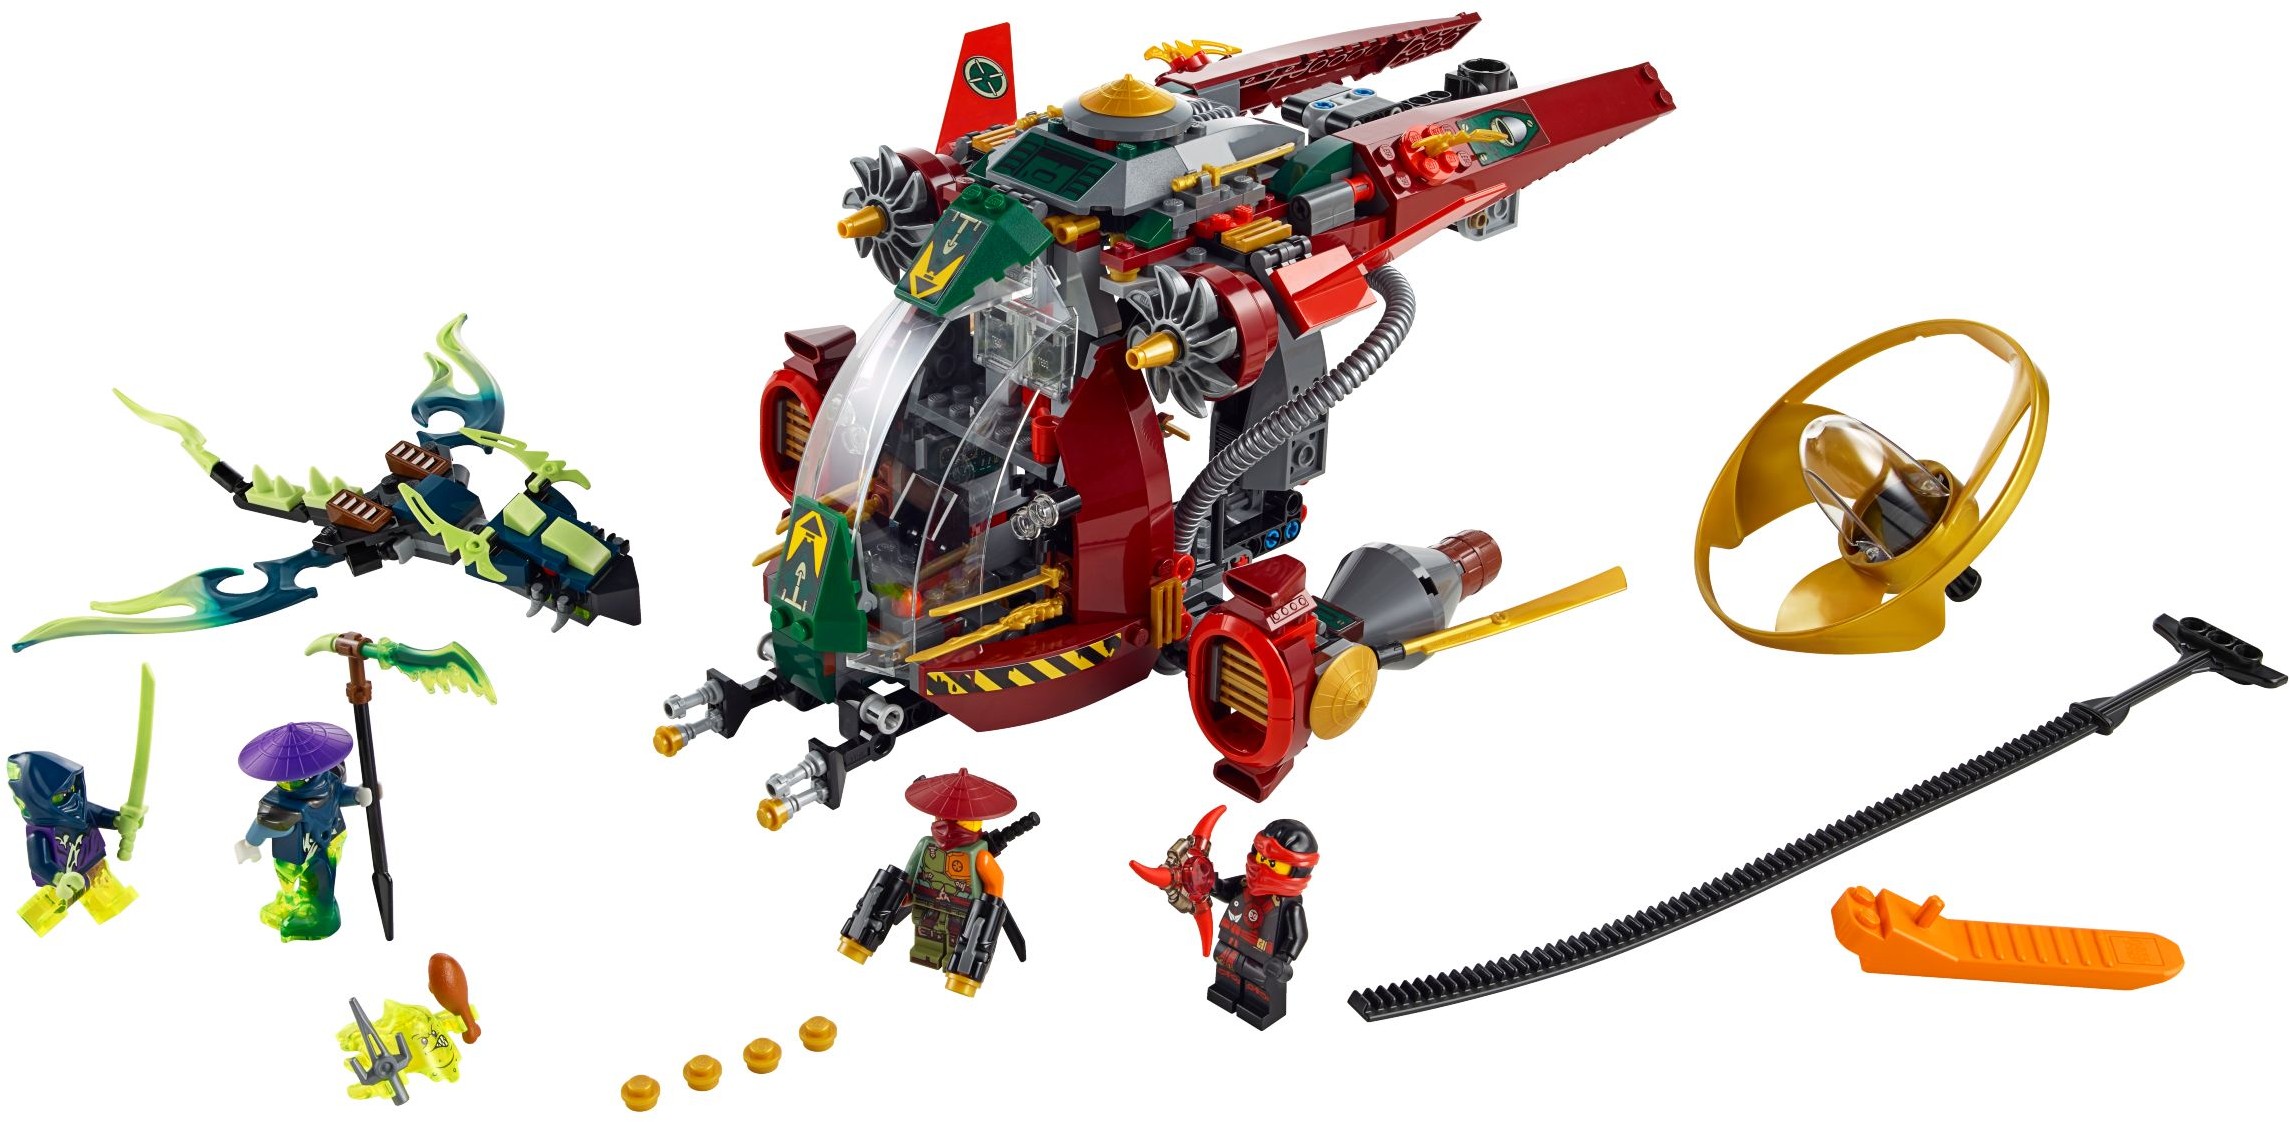 Lego Ninjago. Ronin R.E.X.